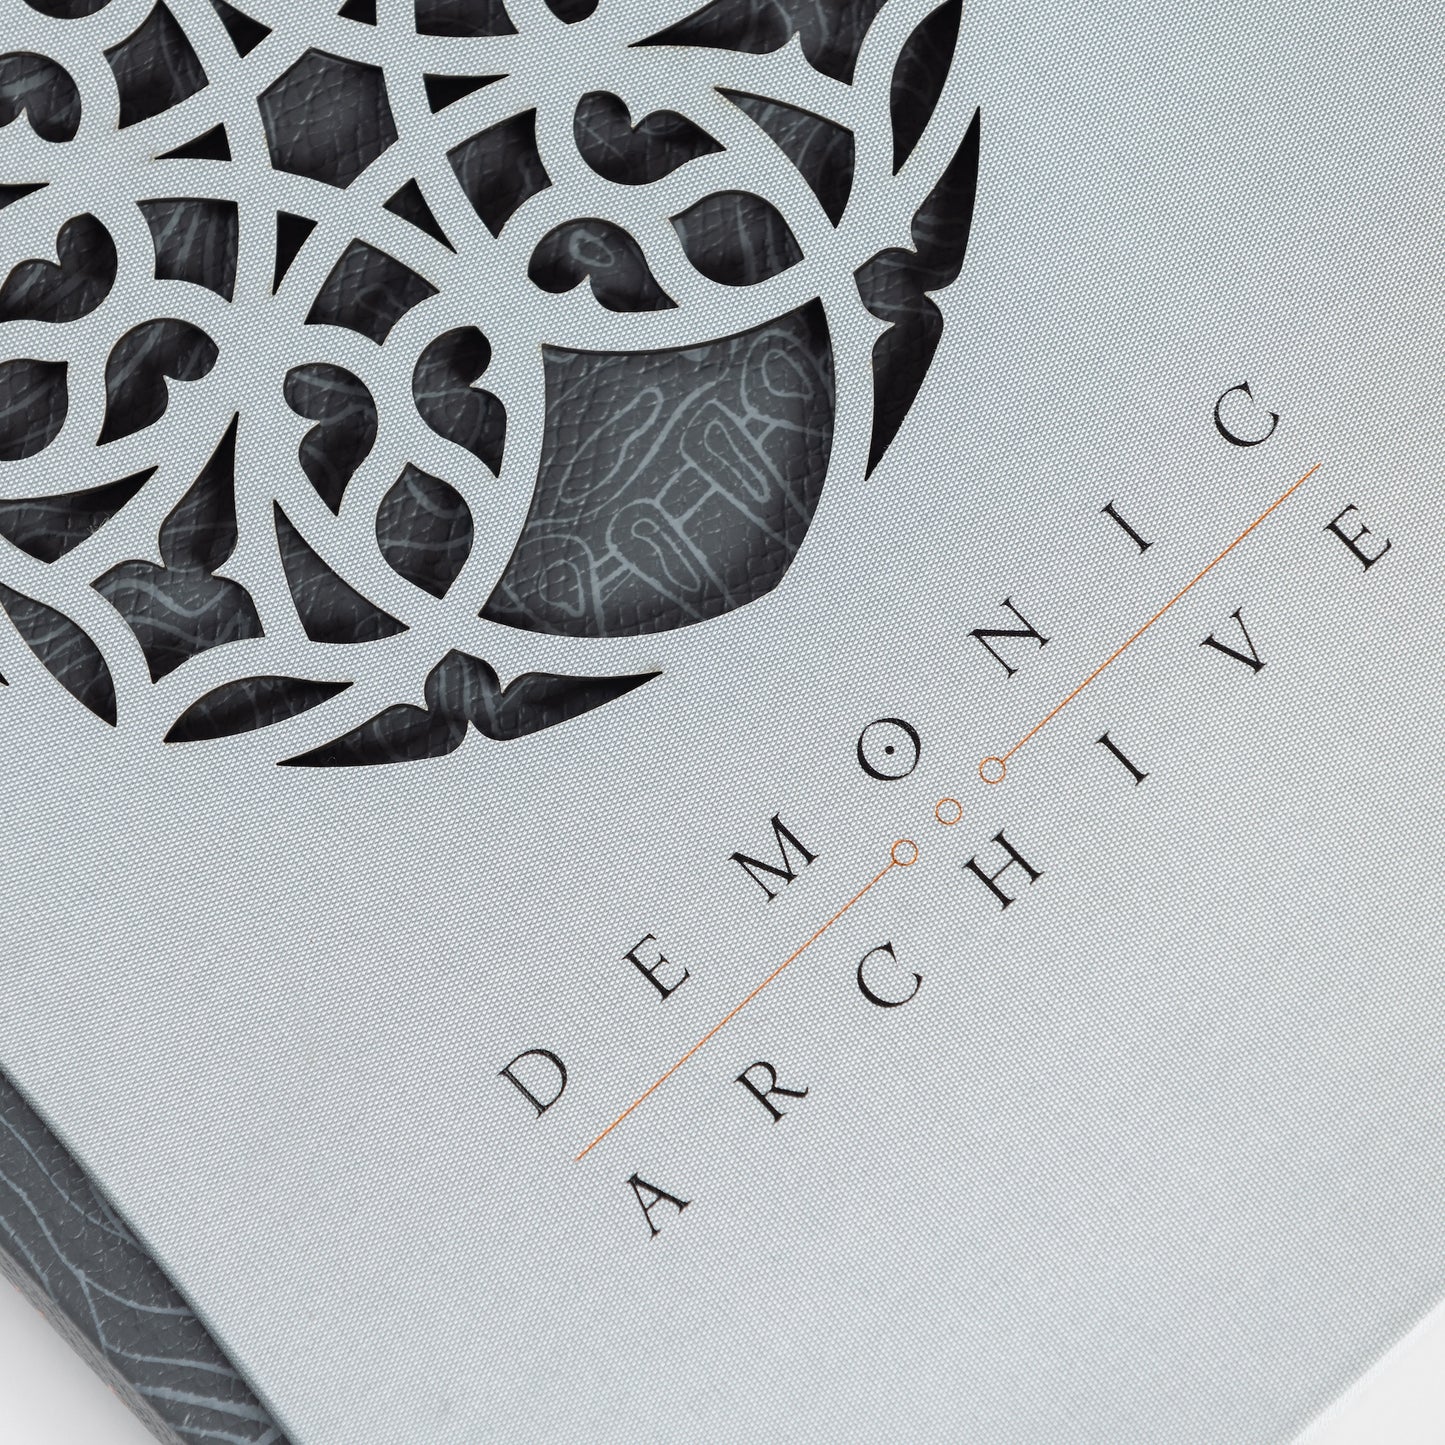 Demonic Archive: The Mythology of Demon's Souls (Pre-order)